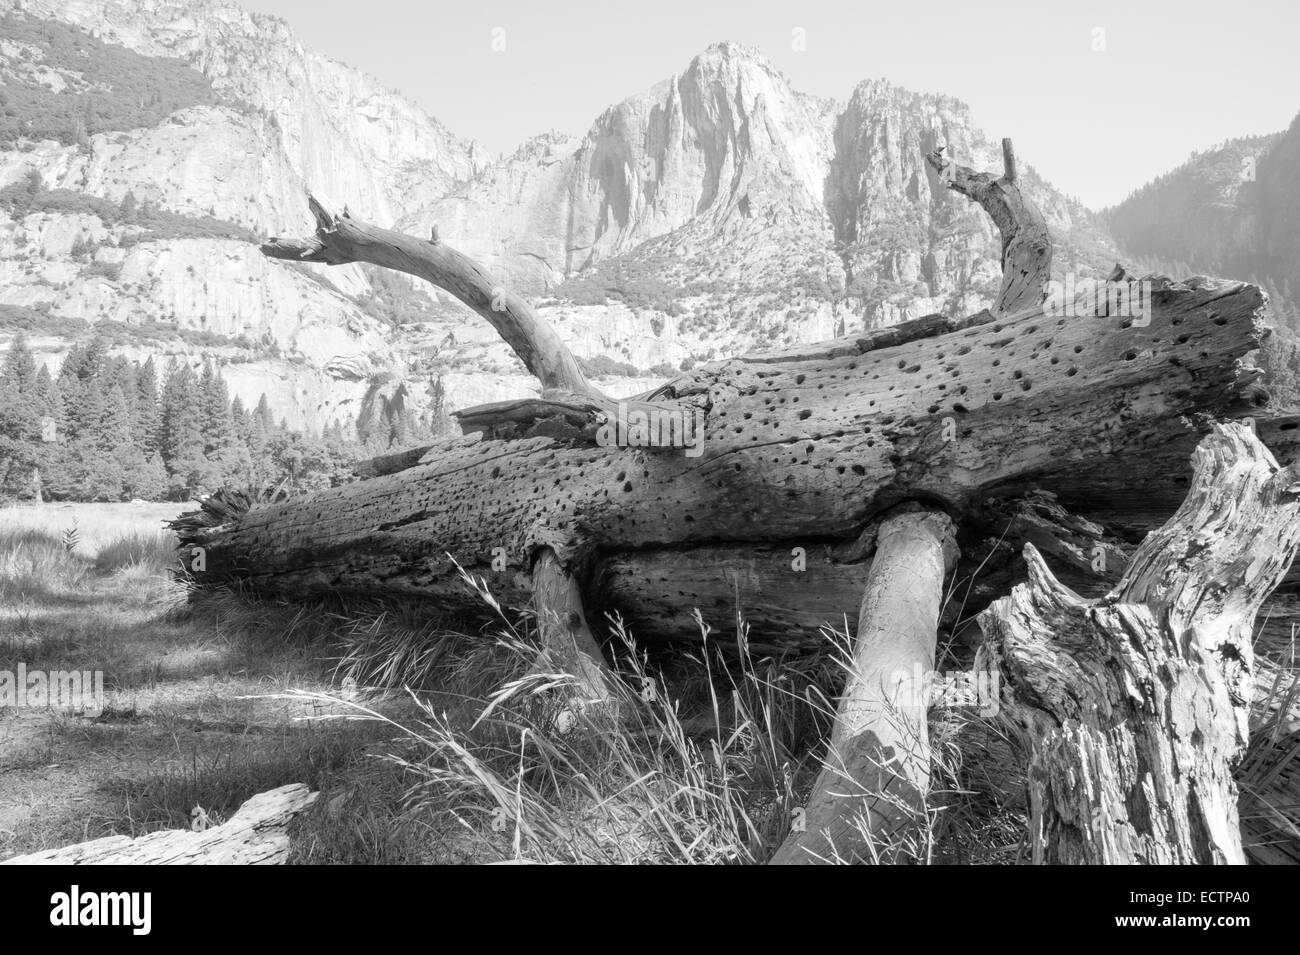 A  termite-eaten fallen tree, in Yosemite valley, National Park, California US. Stock Photo